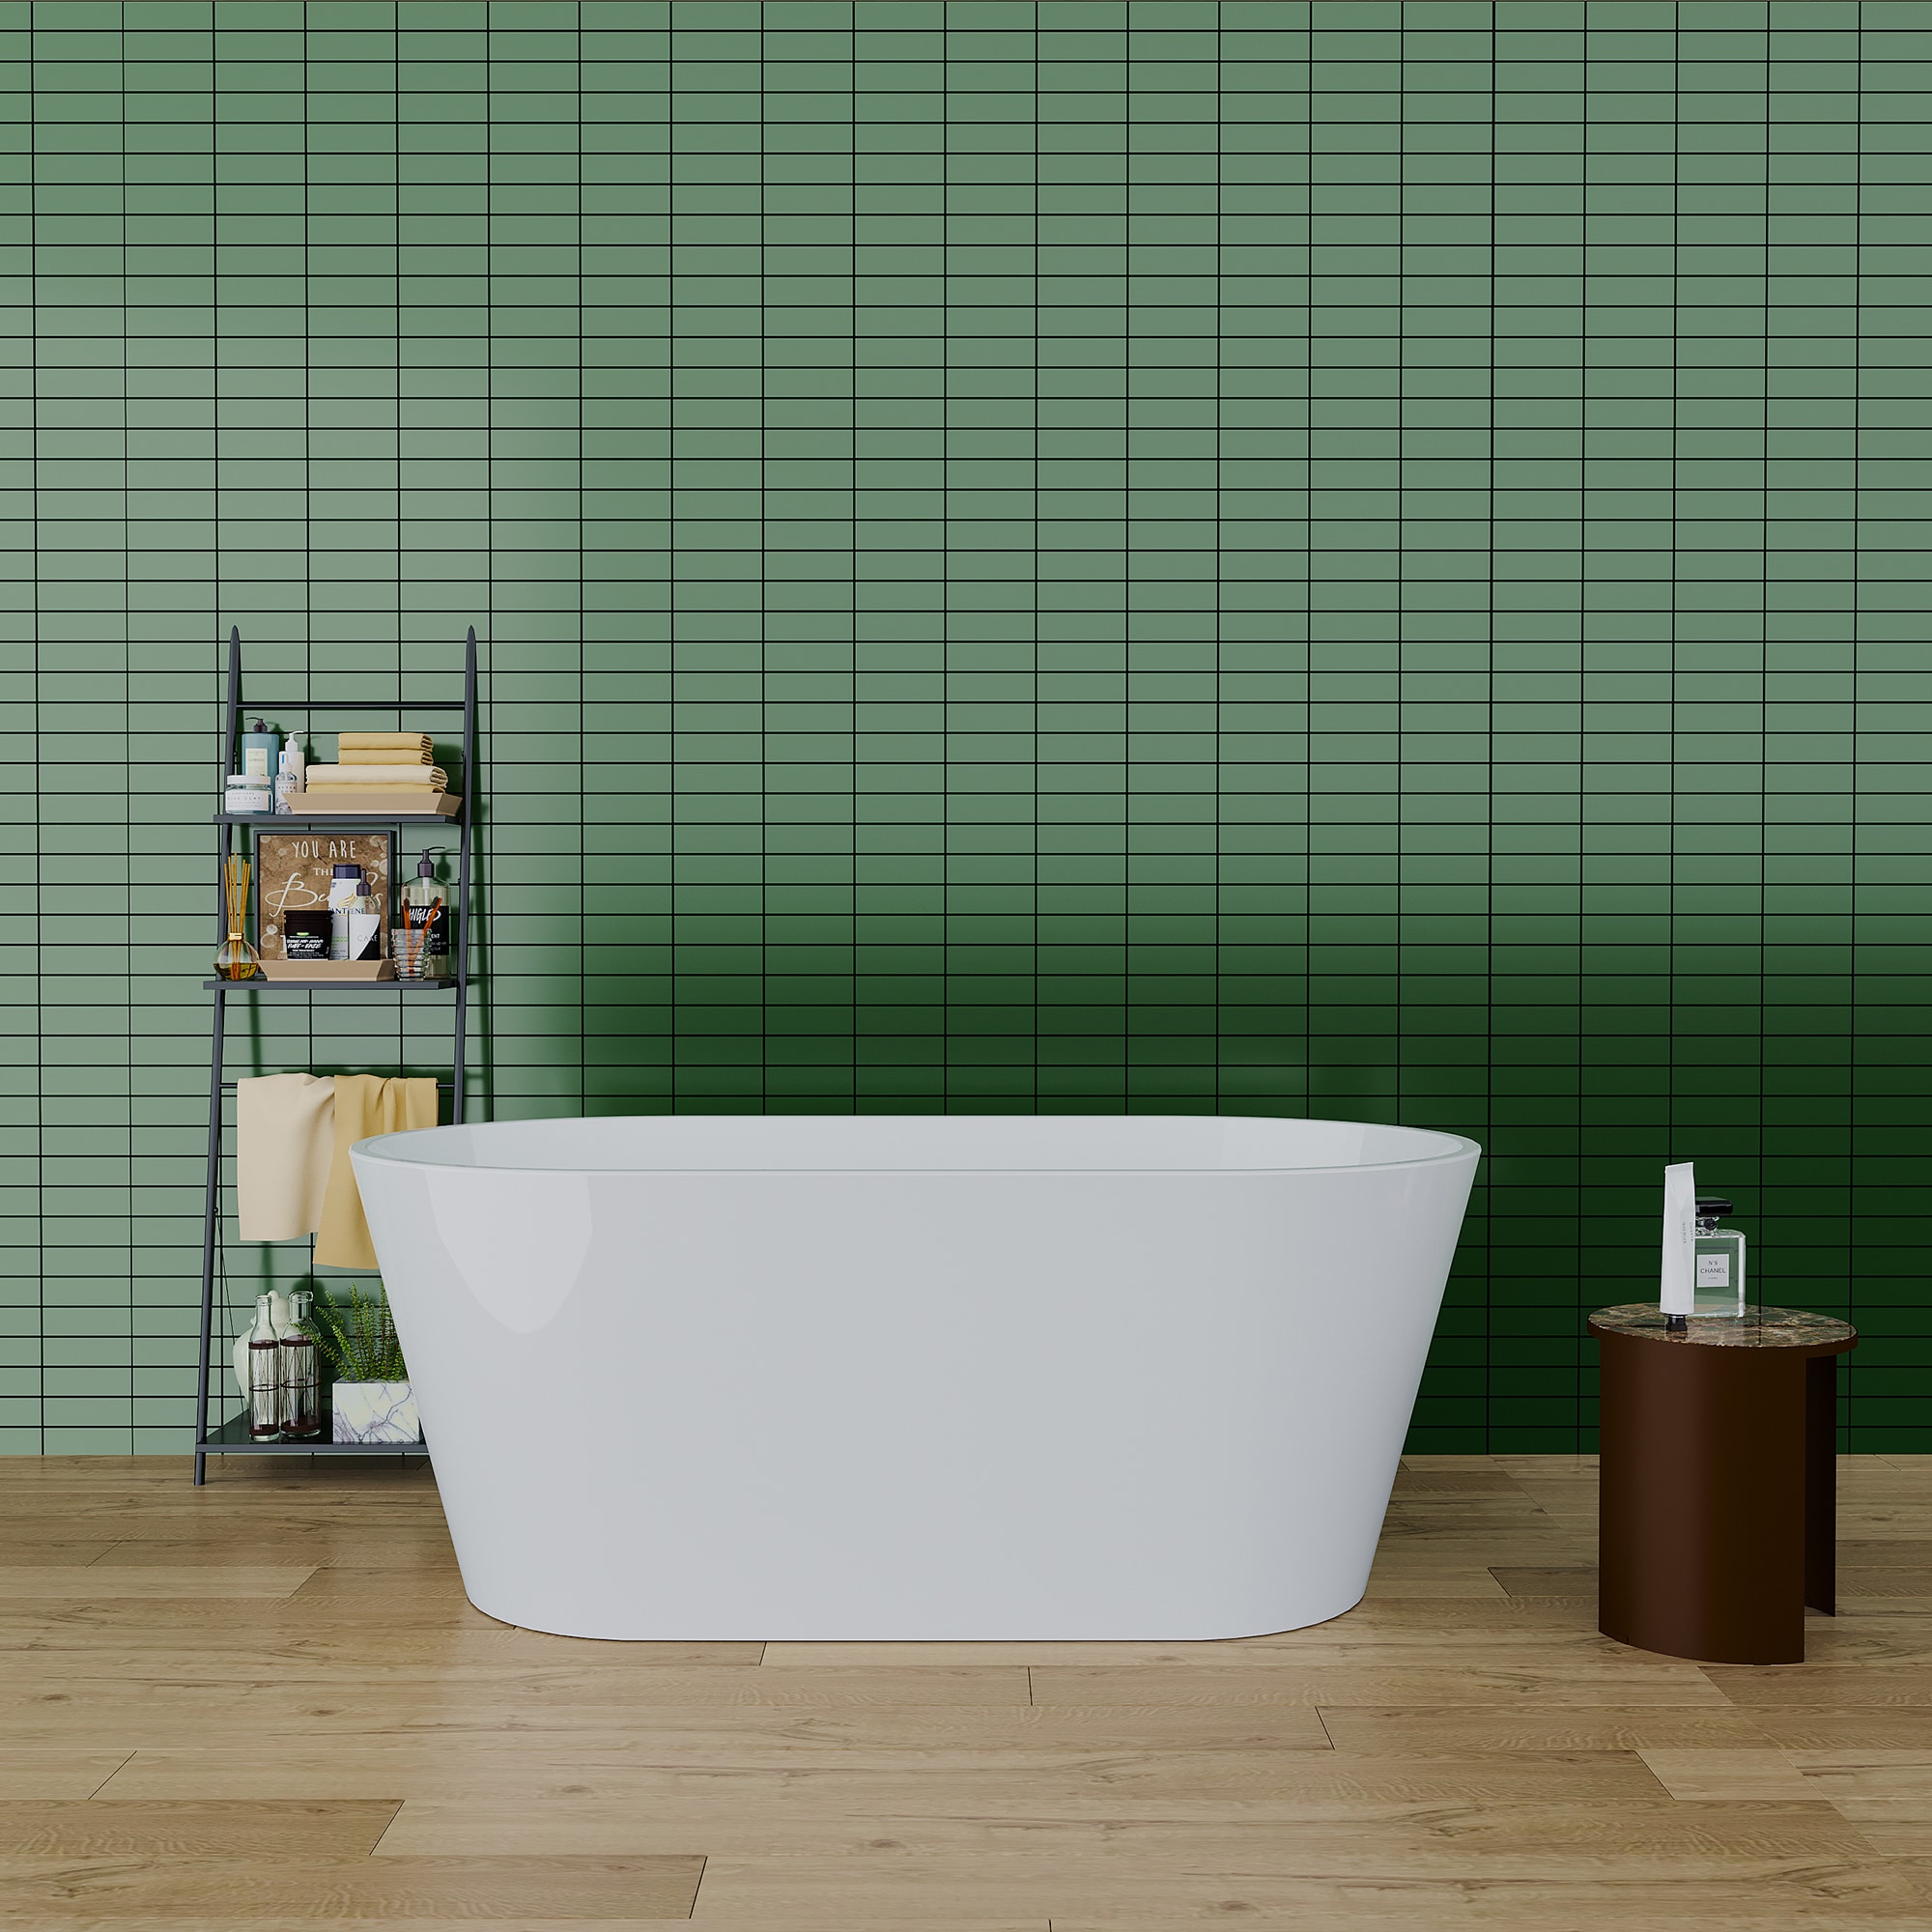 CASAINC Bathtub 31-in x 59-in White Acrylic Oval Freestanding Soaking Bathtub with Drain (Center Drain) | TC-BT1525